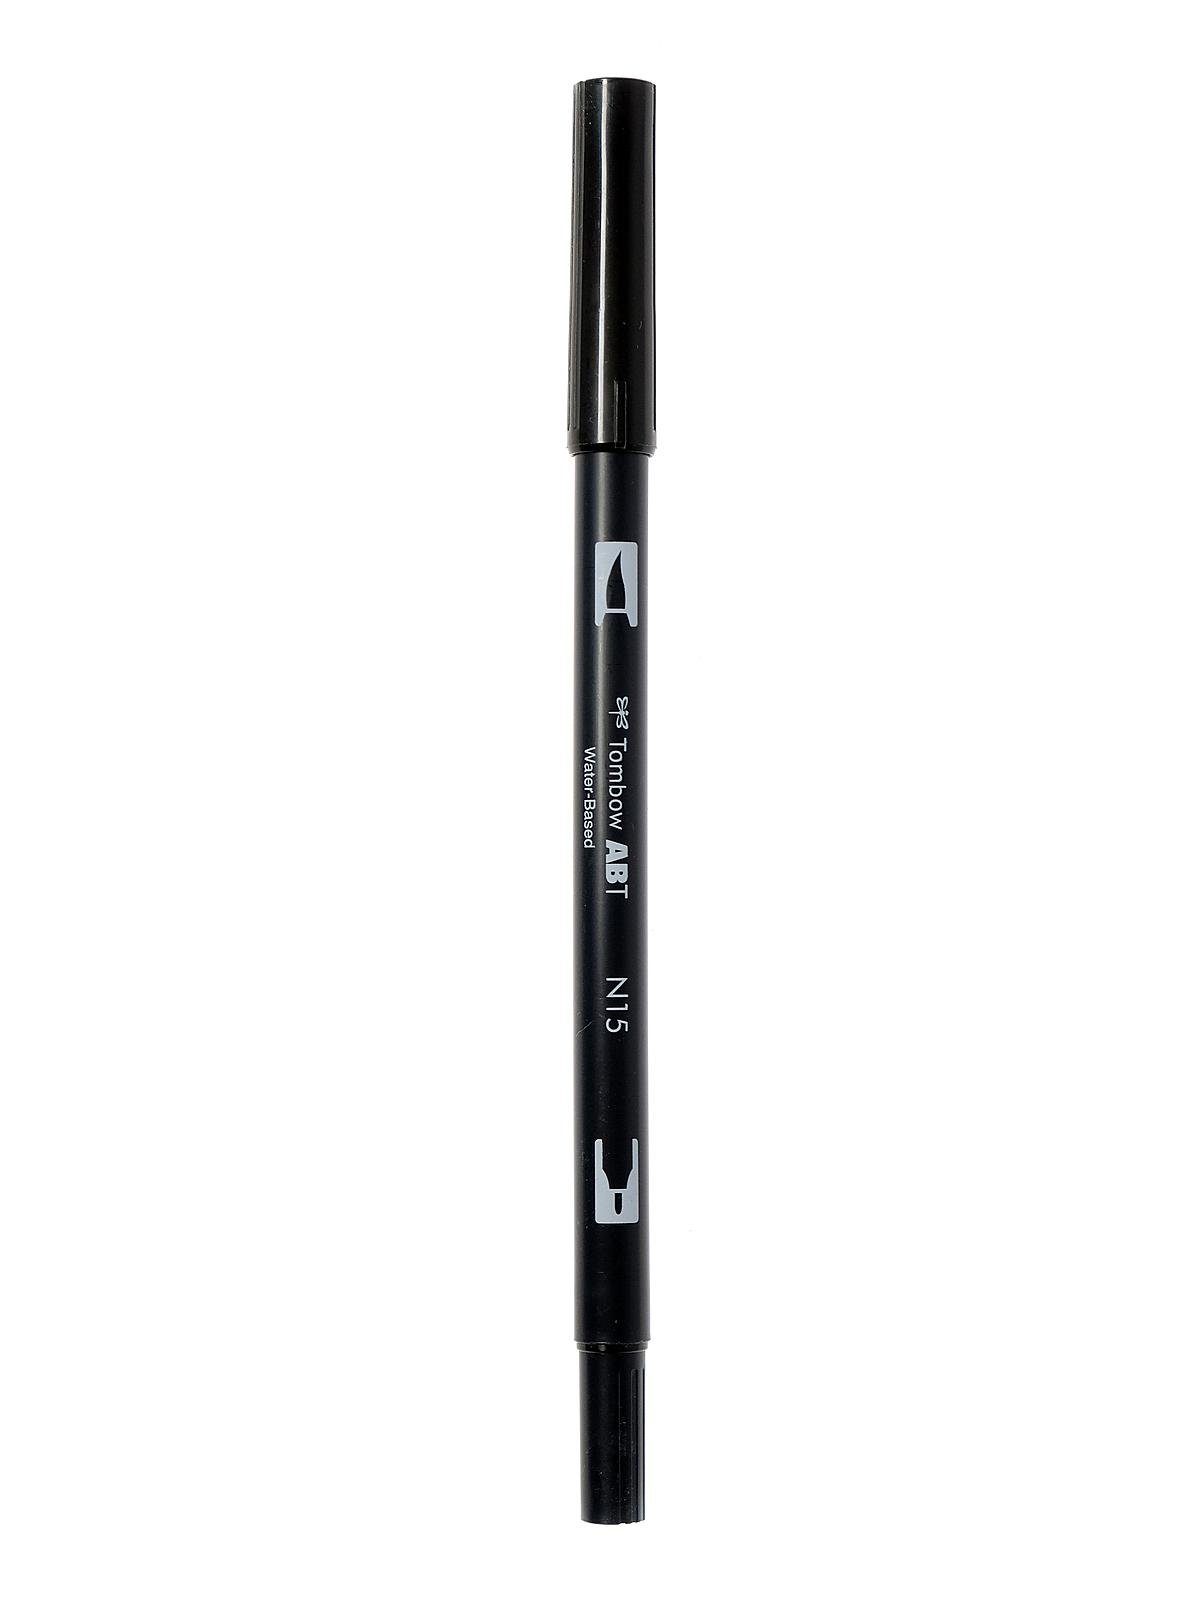 Tombow Abt Dual Brush Pen - N15 - Black